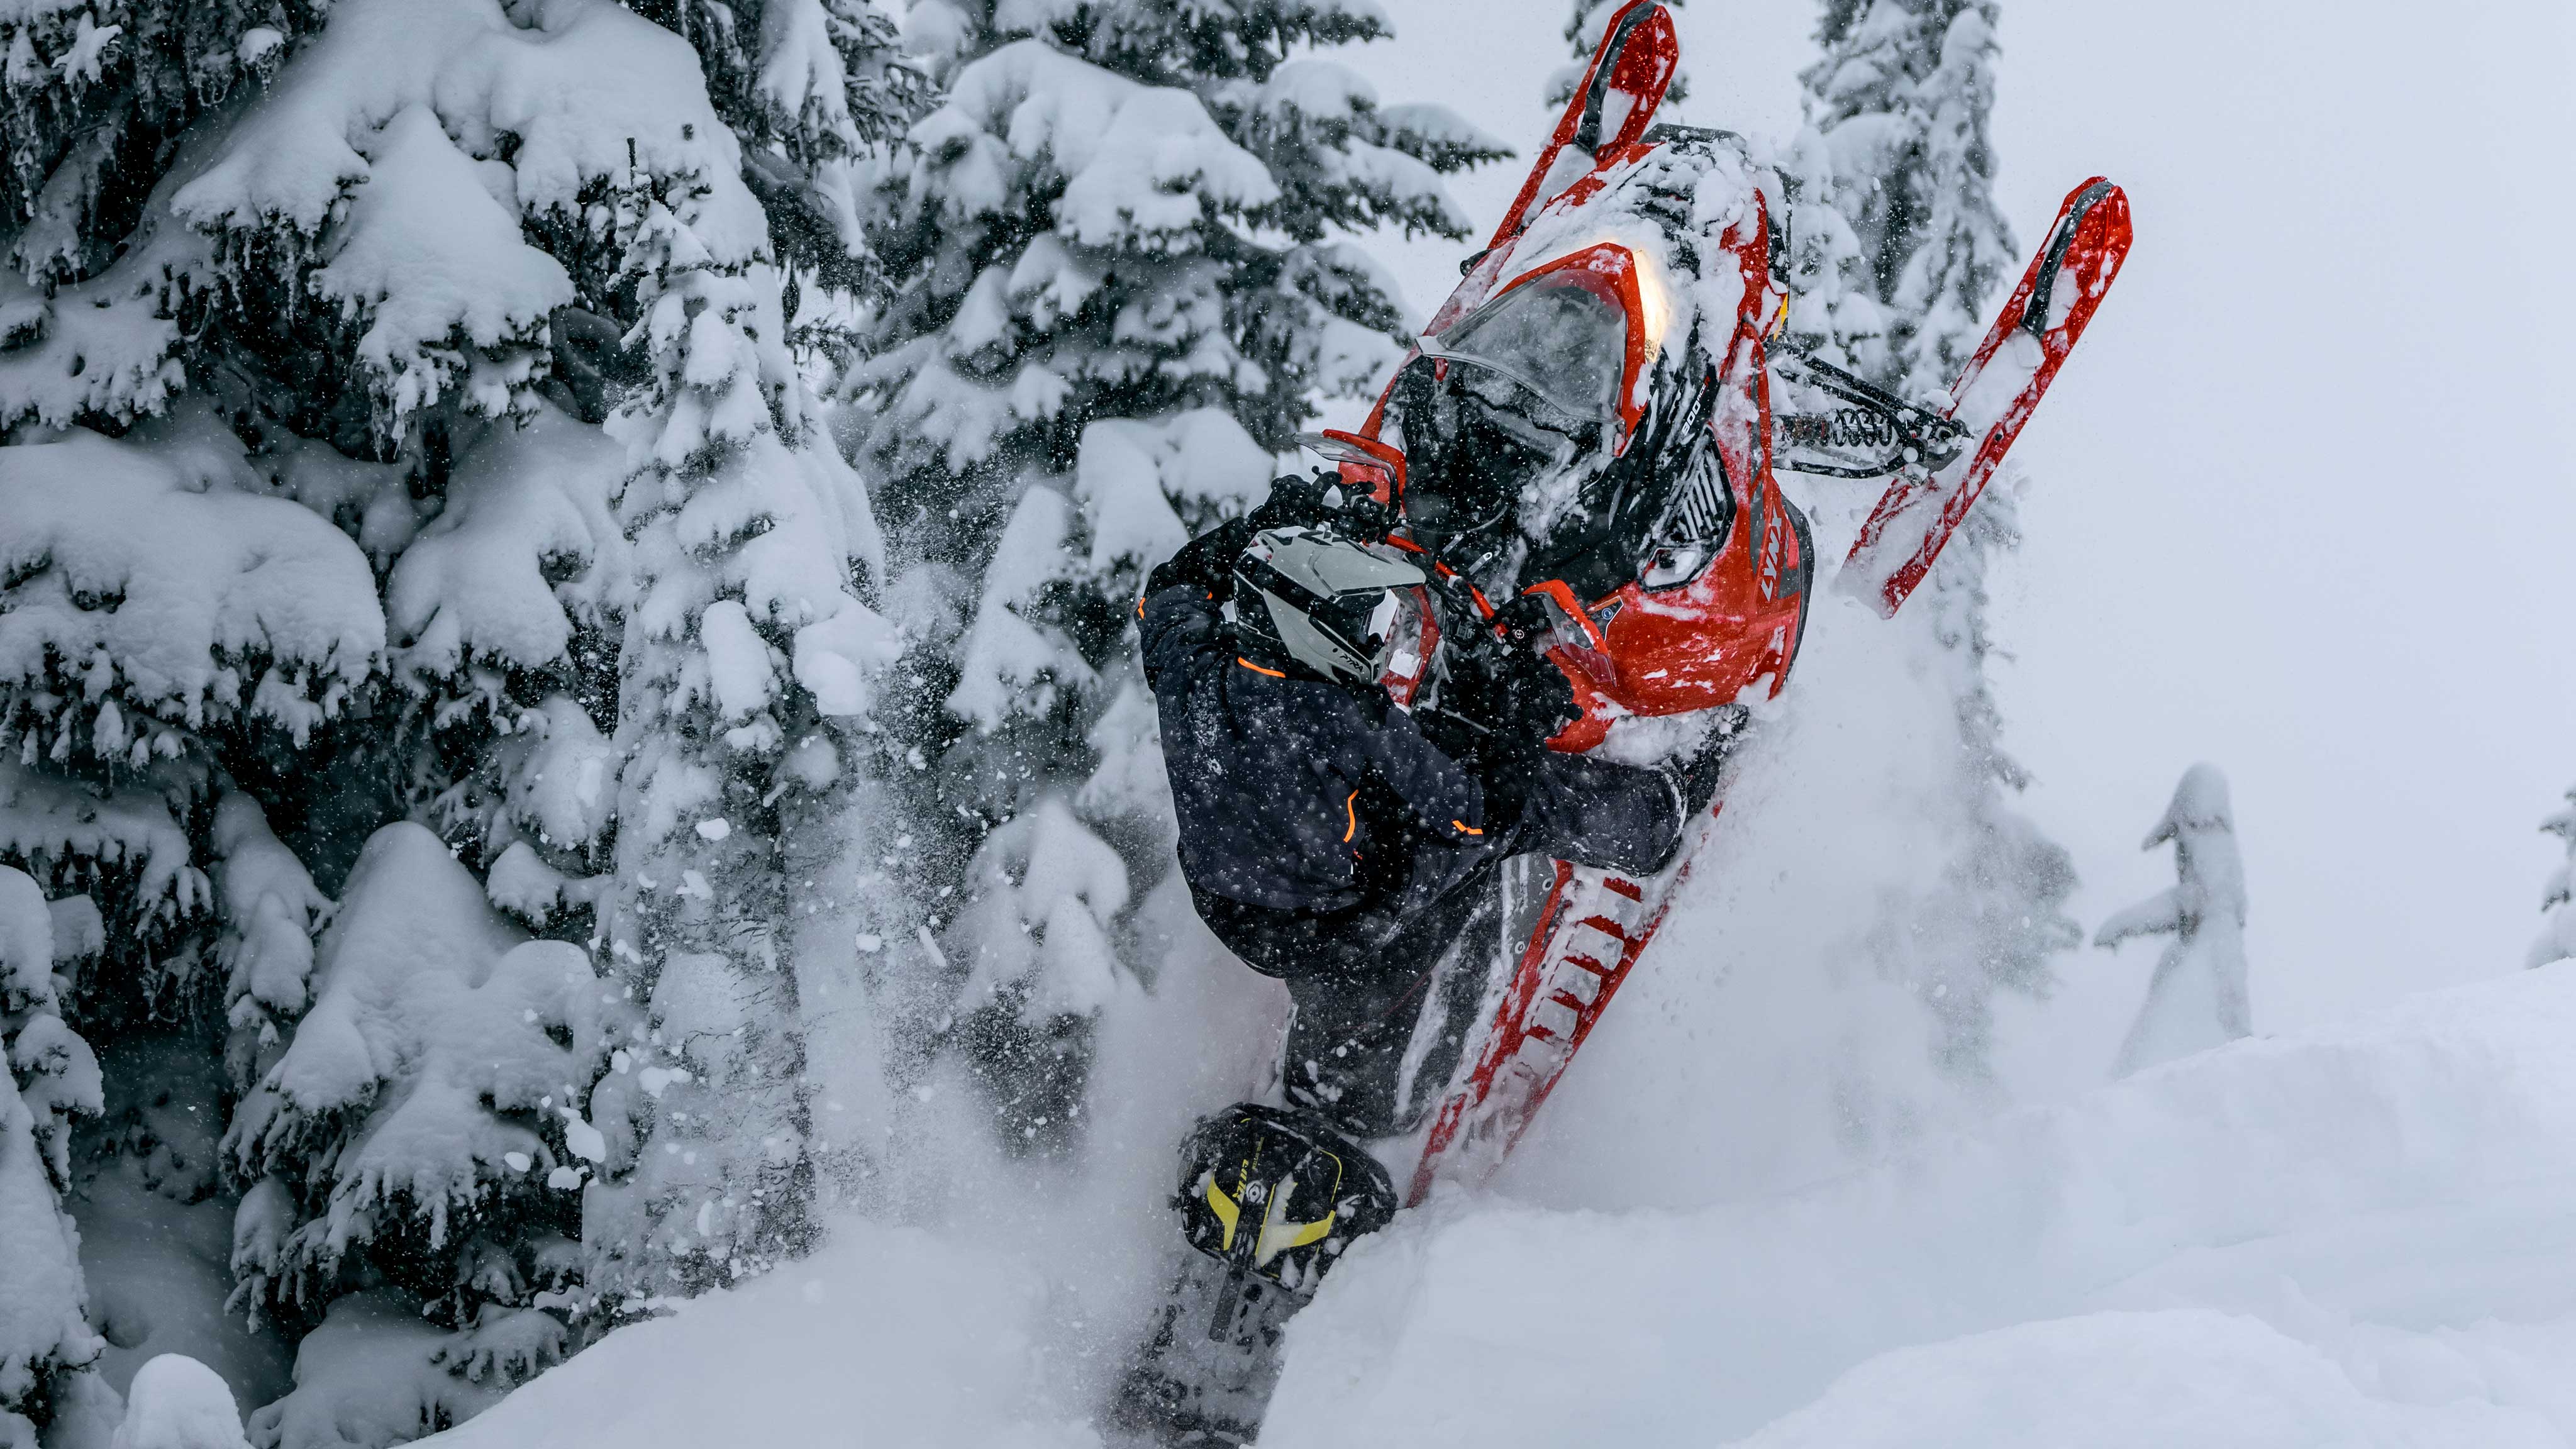 Rider pulling off an air trick on their 2023 Lynx snowmobile